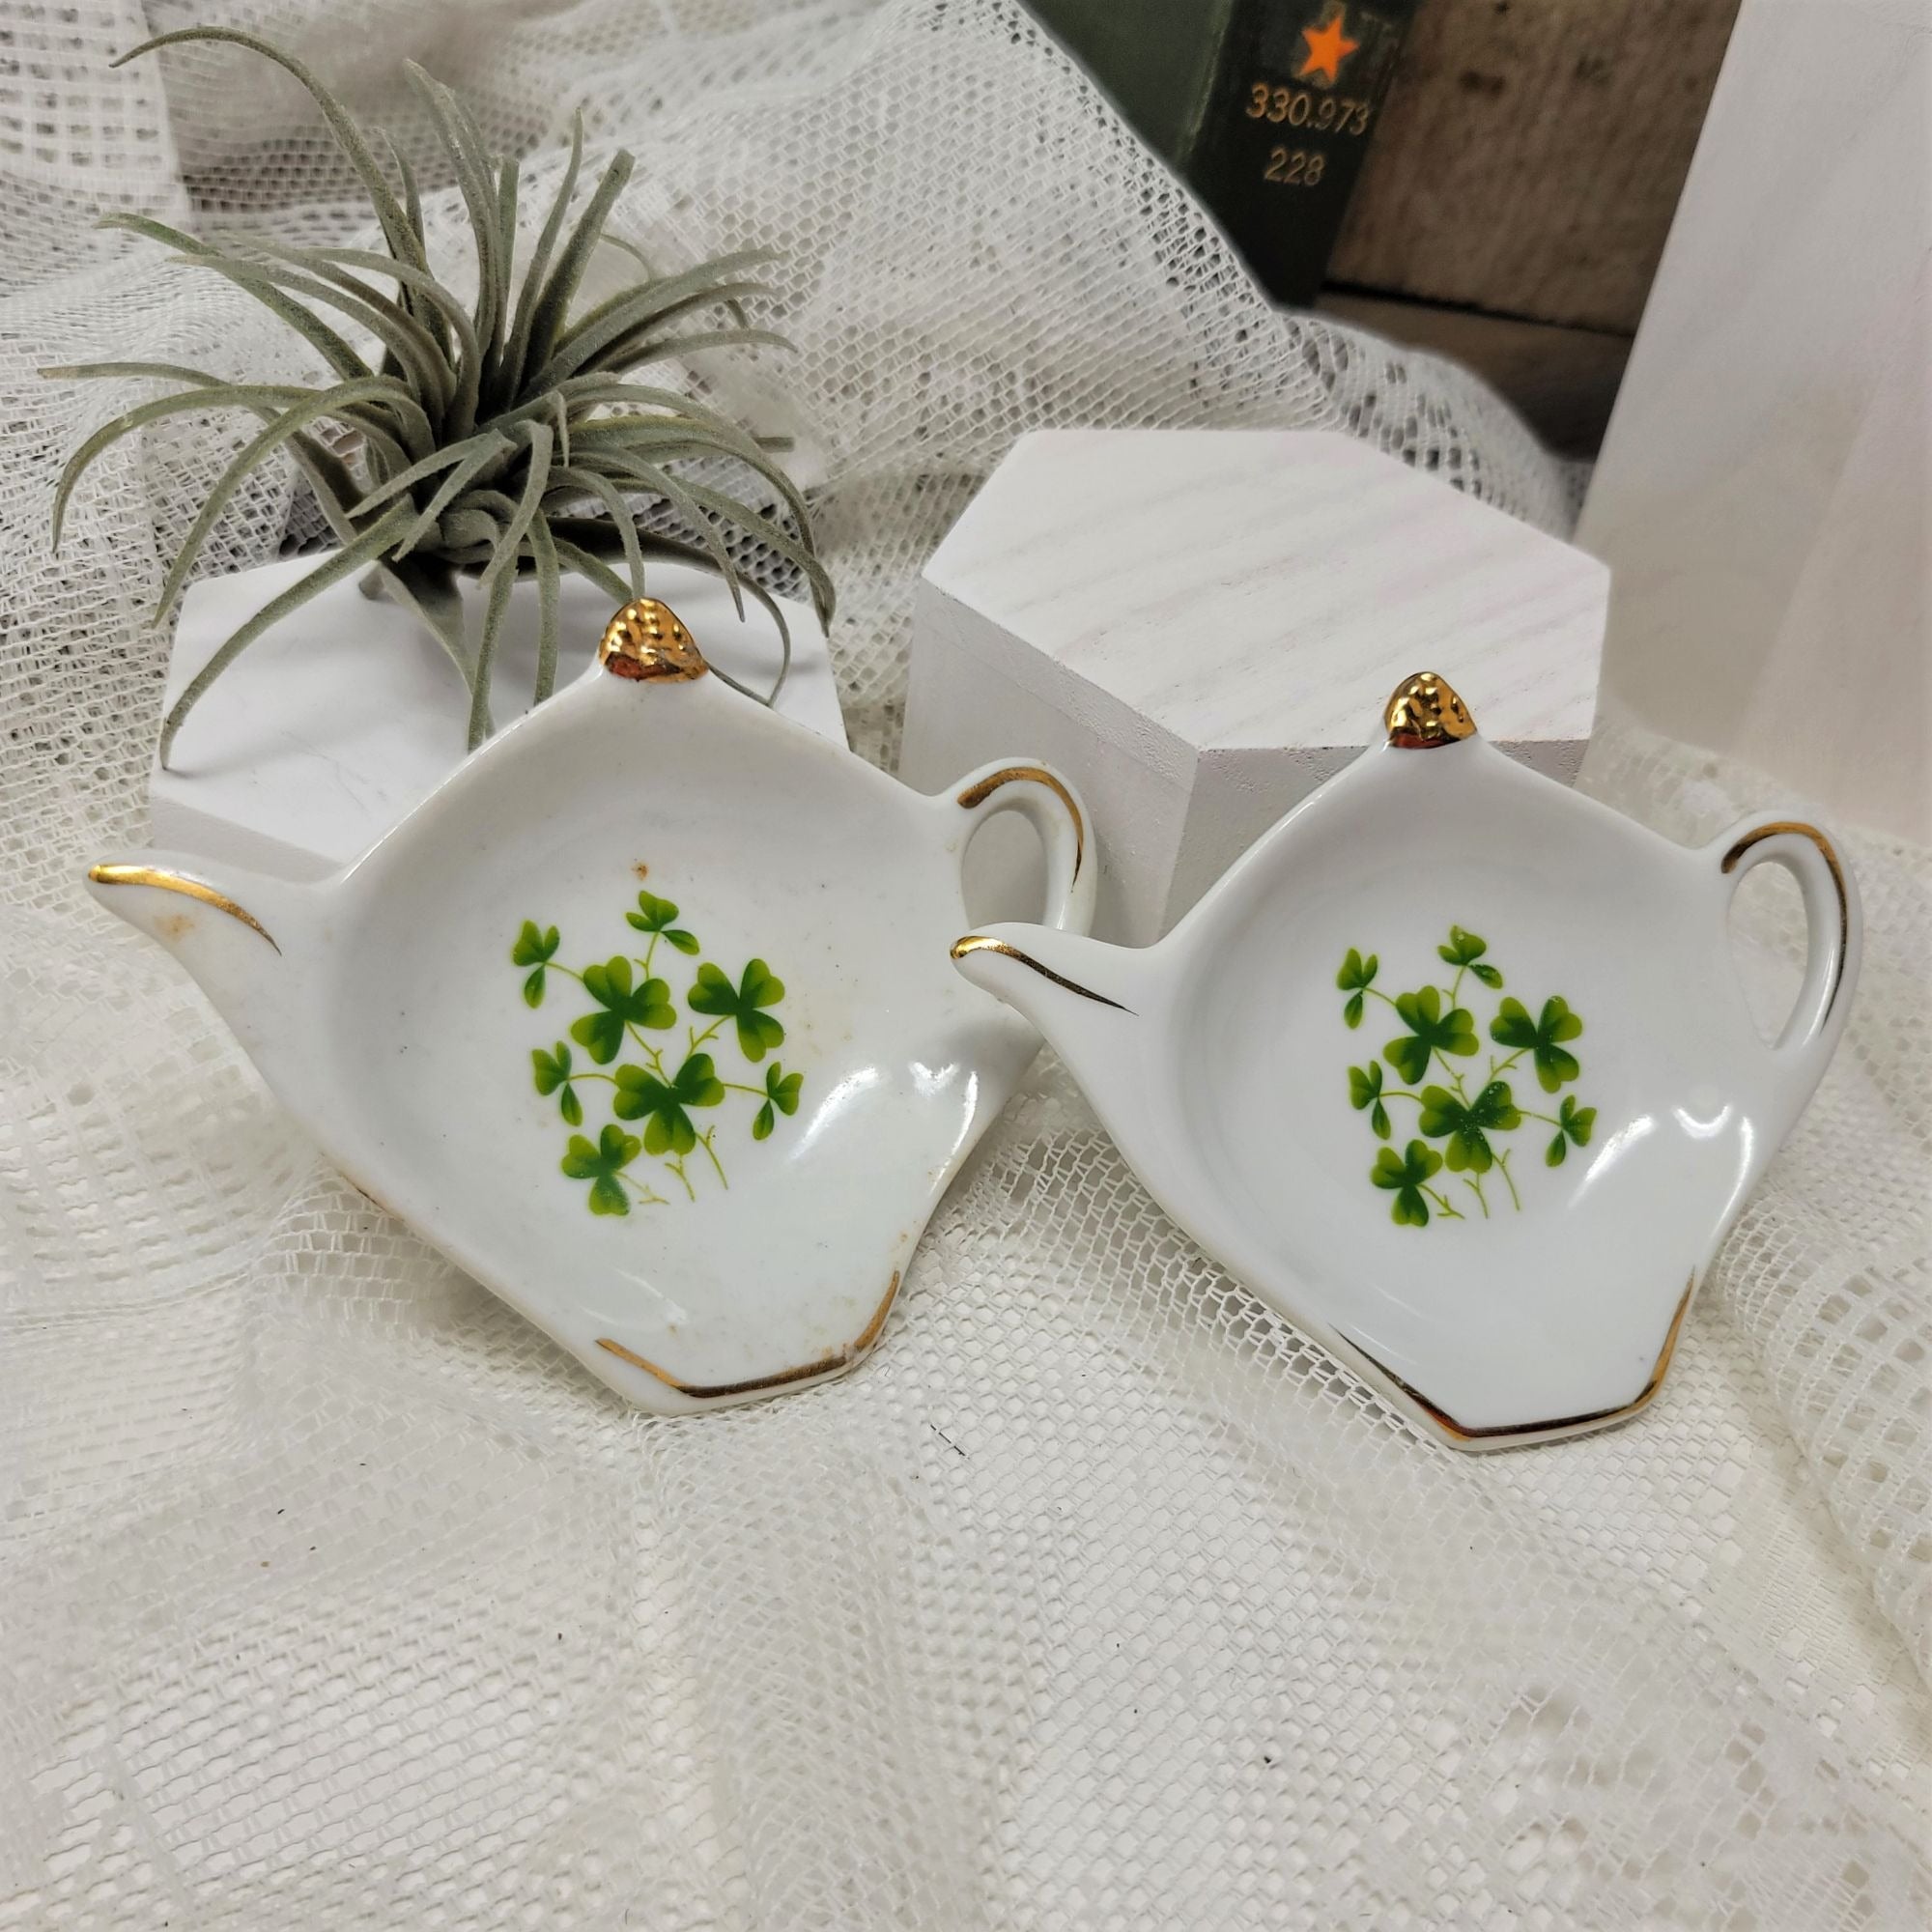 Darling Three leaf Clover Tea Bag Coasters Gold Trim